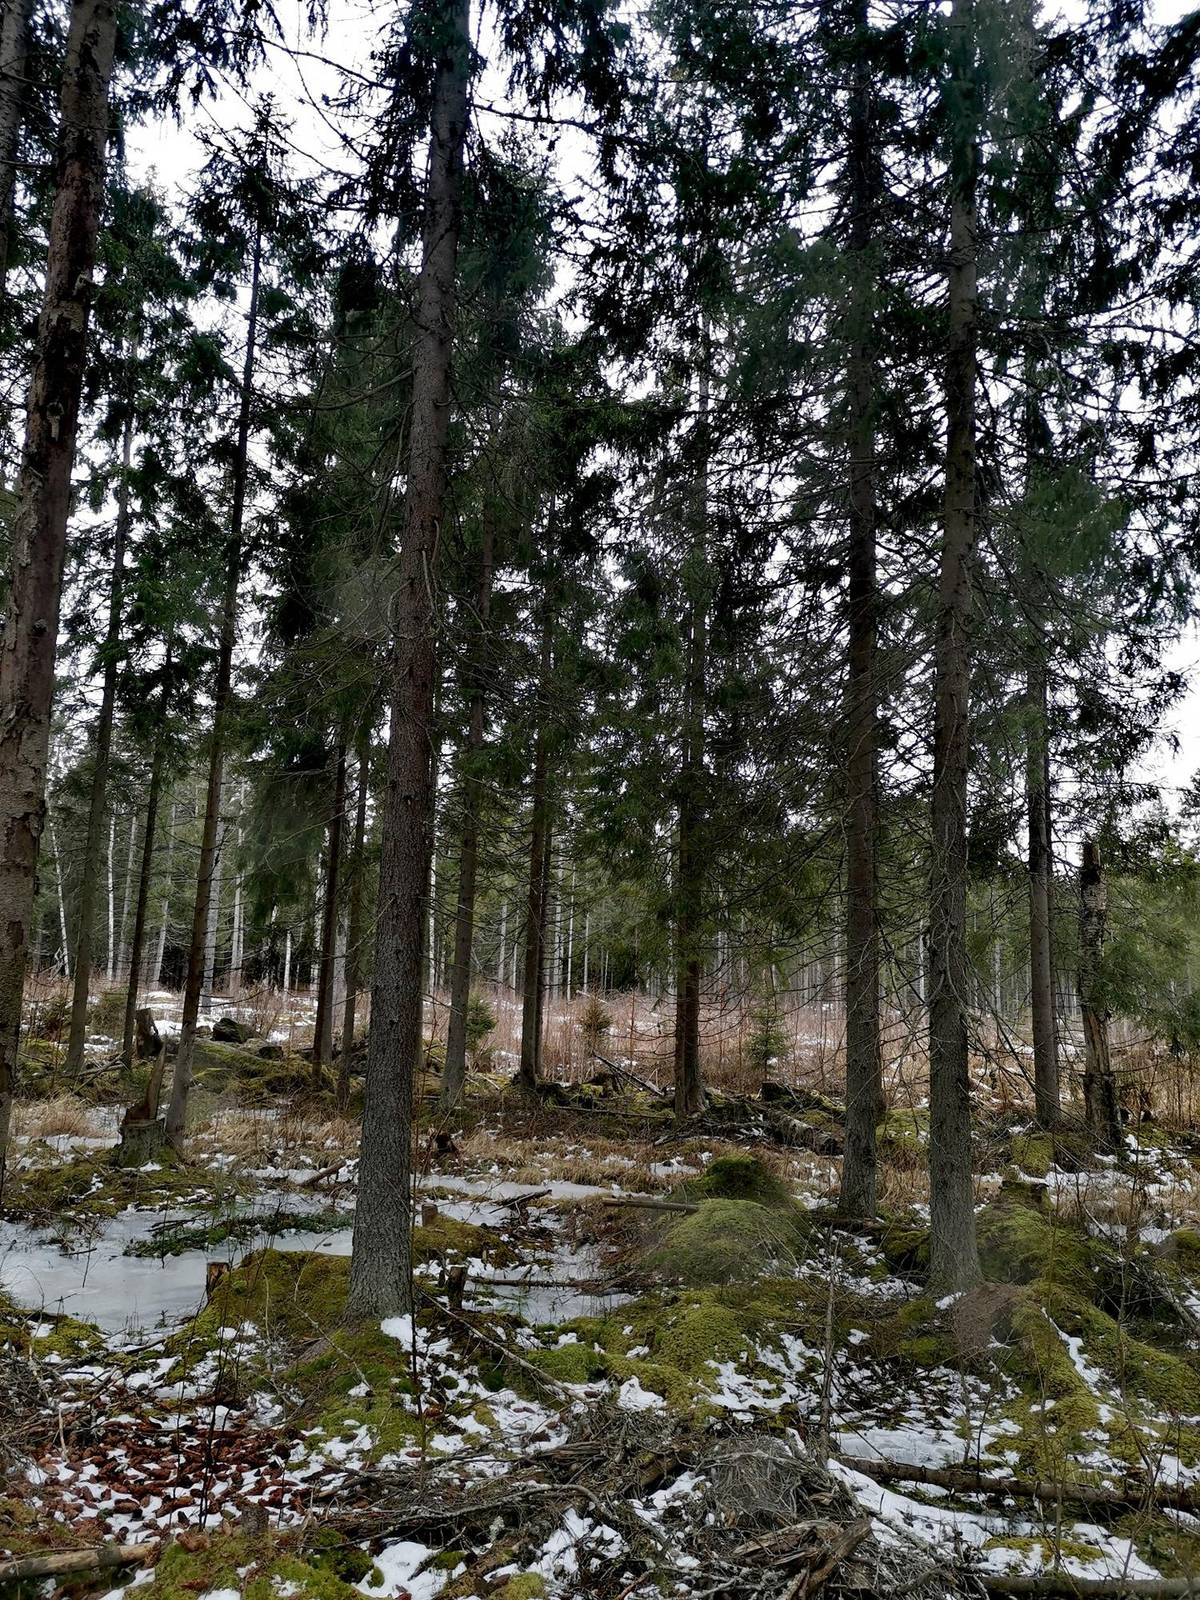 Omslagsbild för objektet Metsätila 9,15 ha, Keskimaa 51-411-6-82, Eurajoki, Kuivalahti, Kydönkalliontie